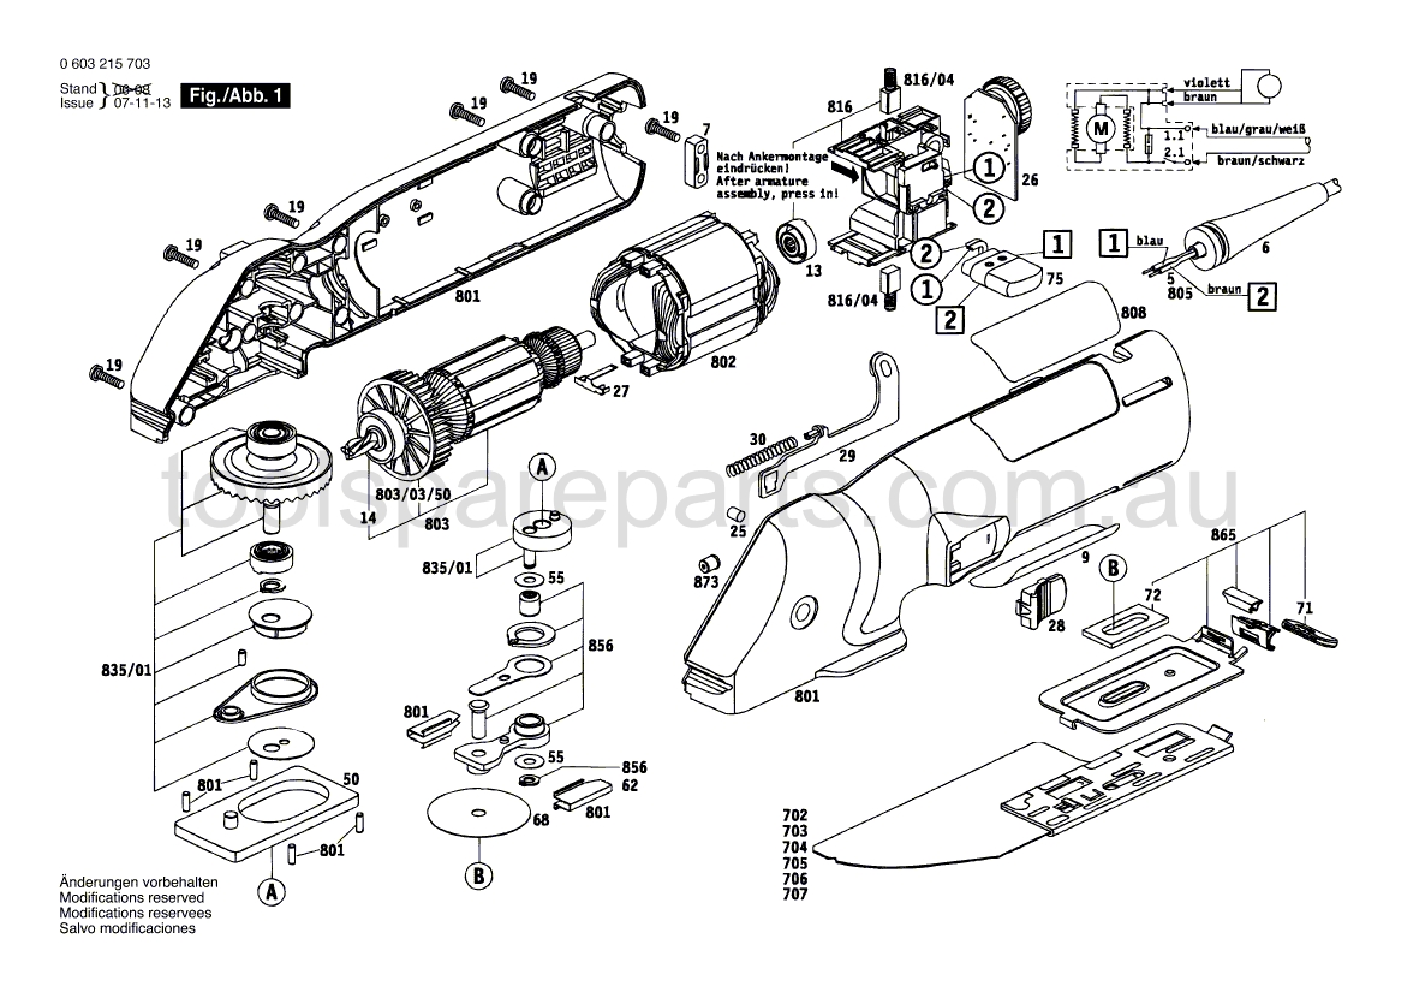 Bosch PFE 280 E 0603215737  Diagram 1